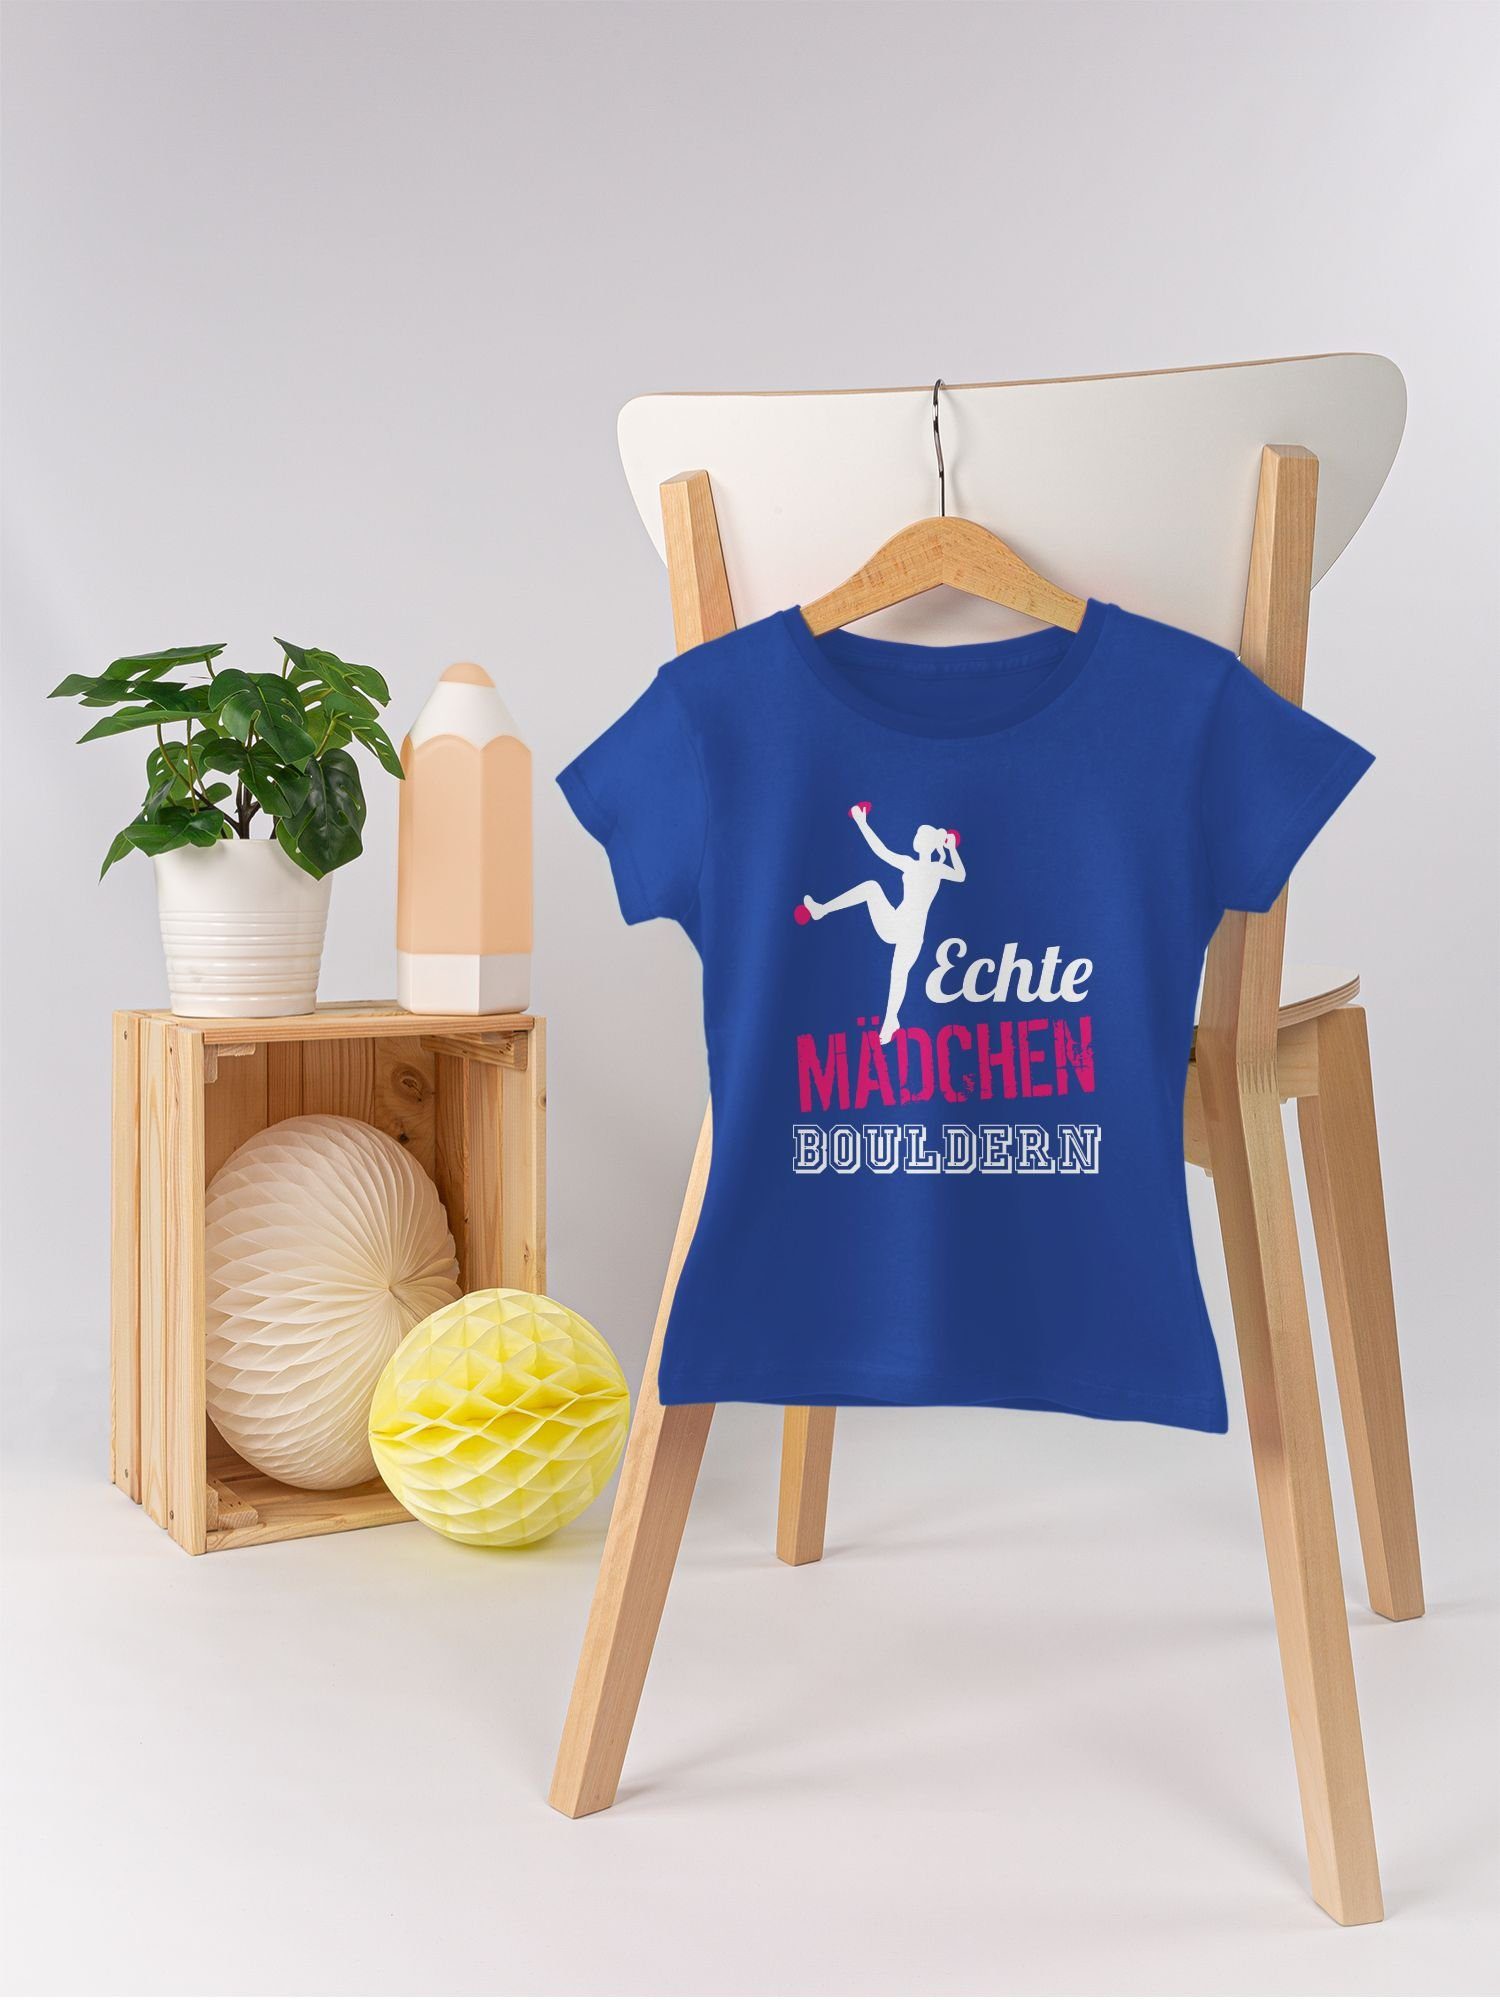 Sport Kleidung 3 Shirtracer fuchsia/weiß Echte bouldern Royalblau T-Shirt Kinder Mädchen